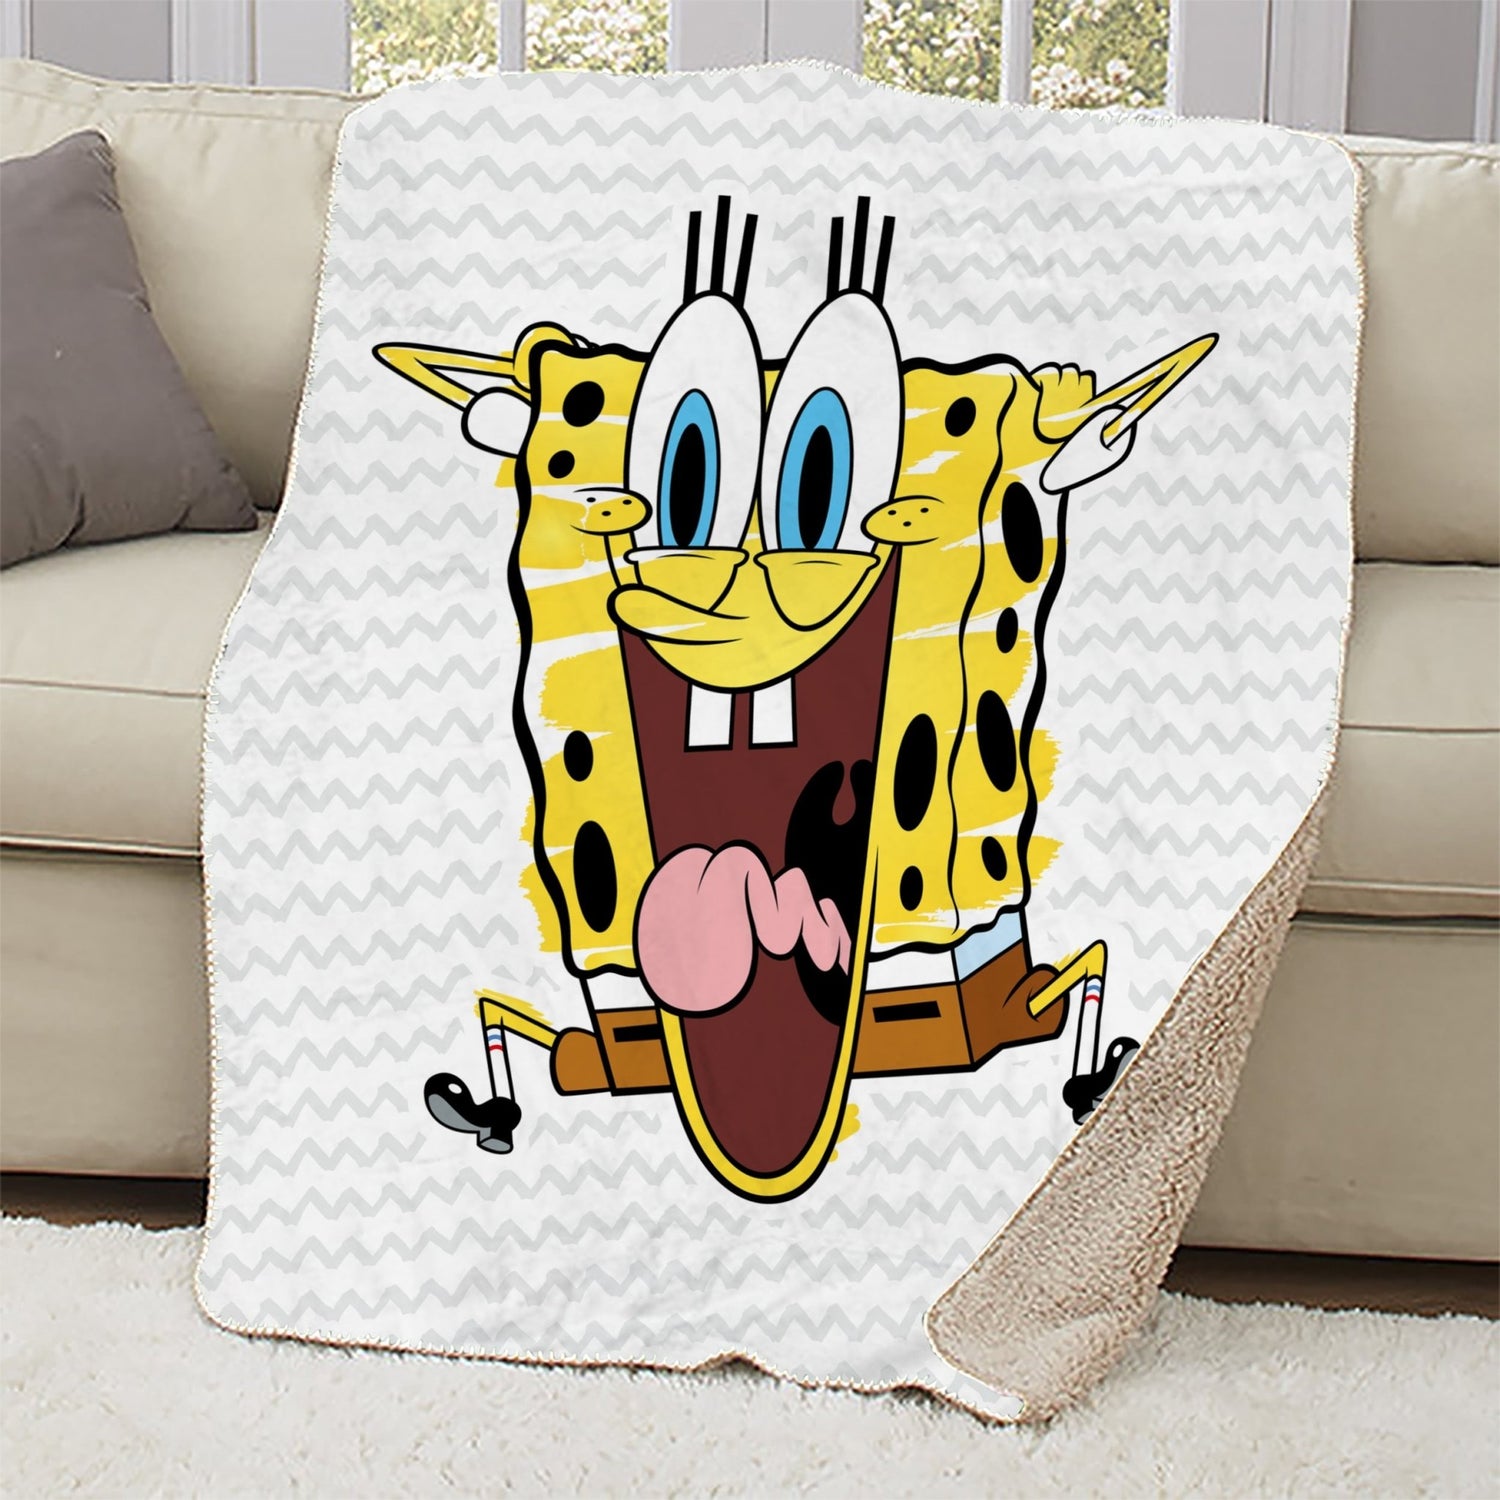 SpongeBob SquarePants Excited Sherpa Blanket - Paramount Shop